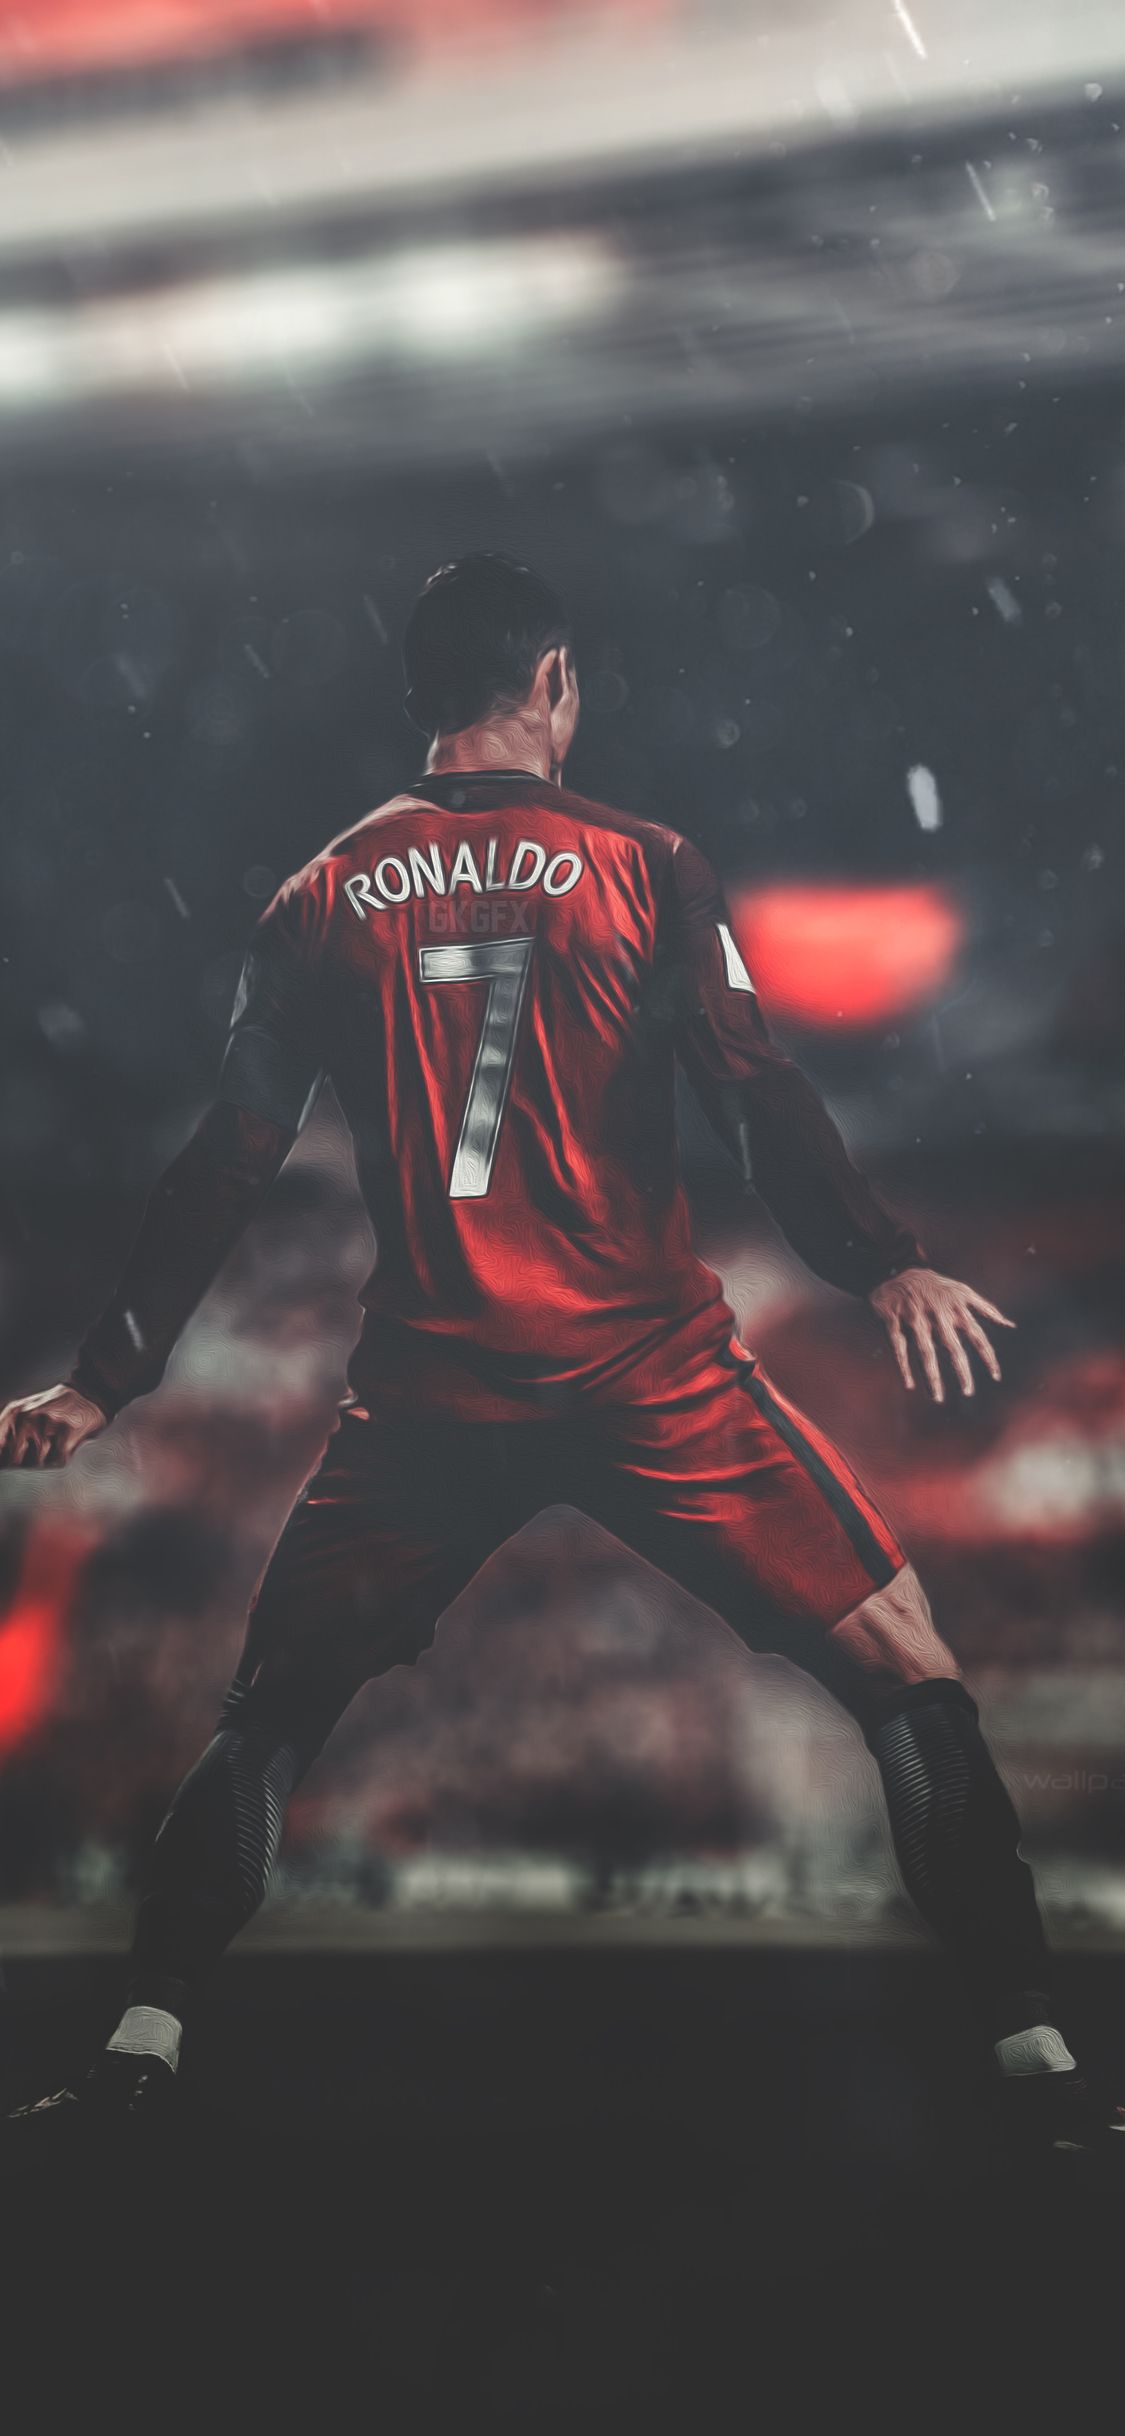 Ronaldo Wallpapers Iphone X